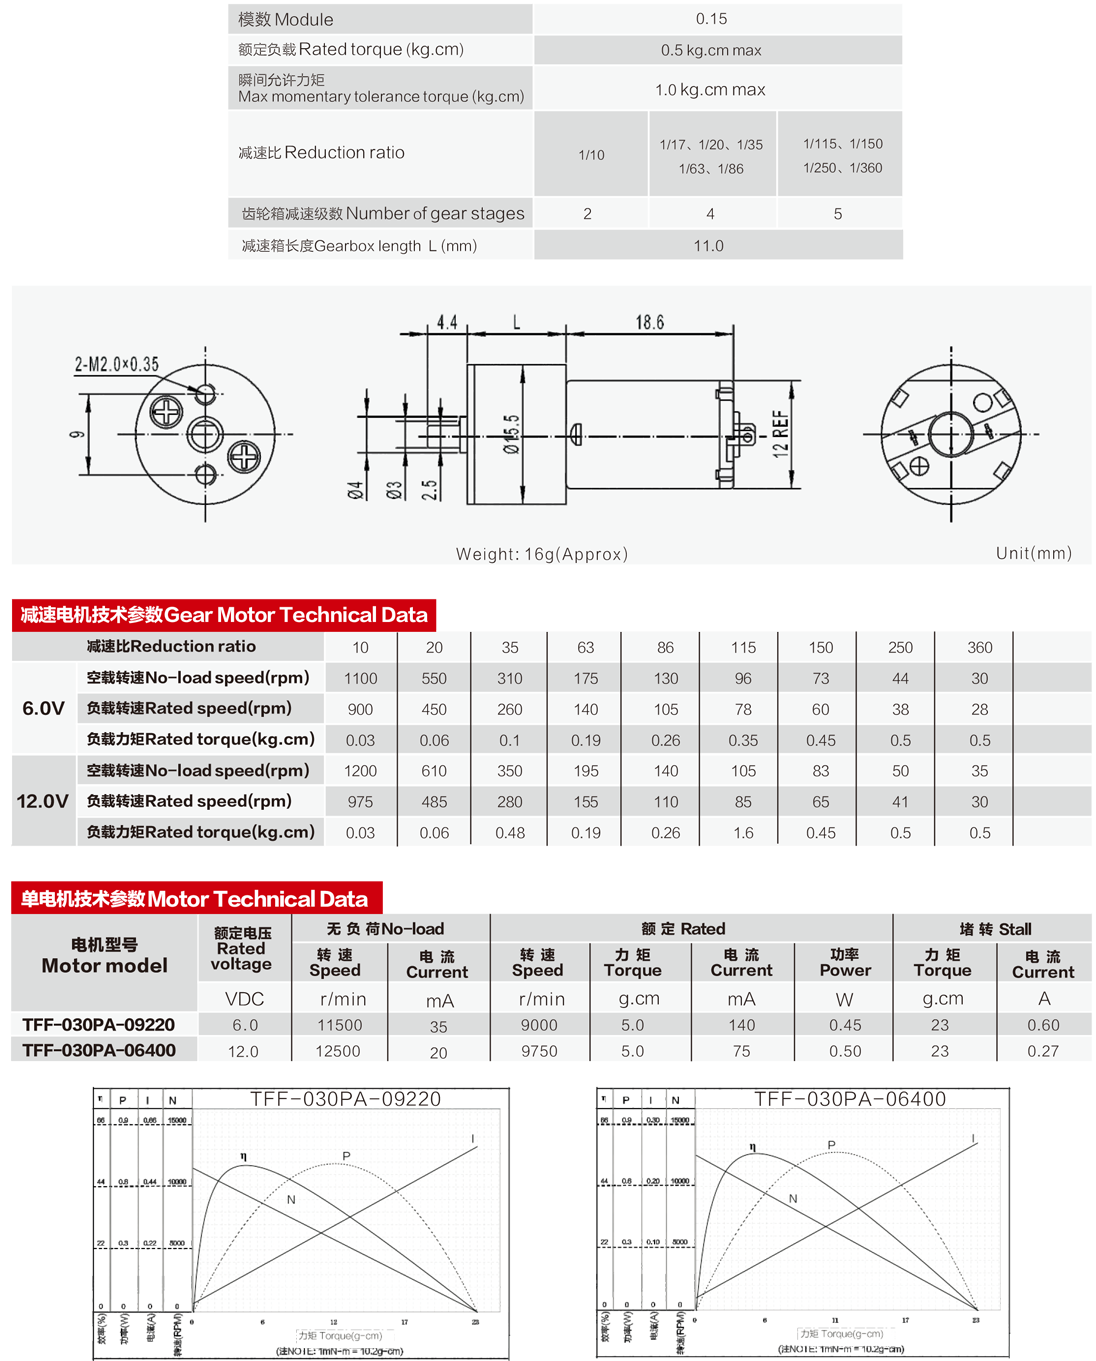 DC-gear-motor-GM16-030PA Dimensions